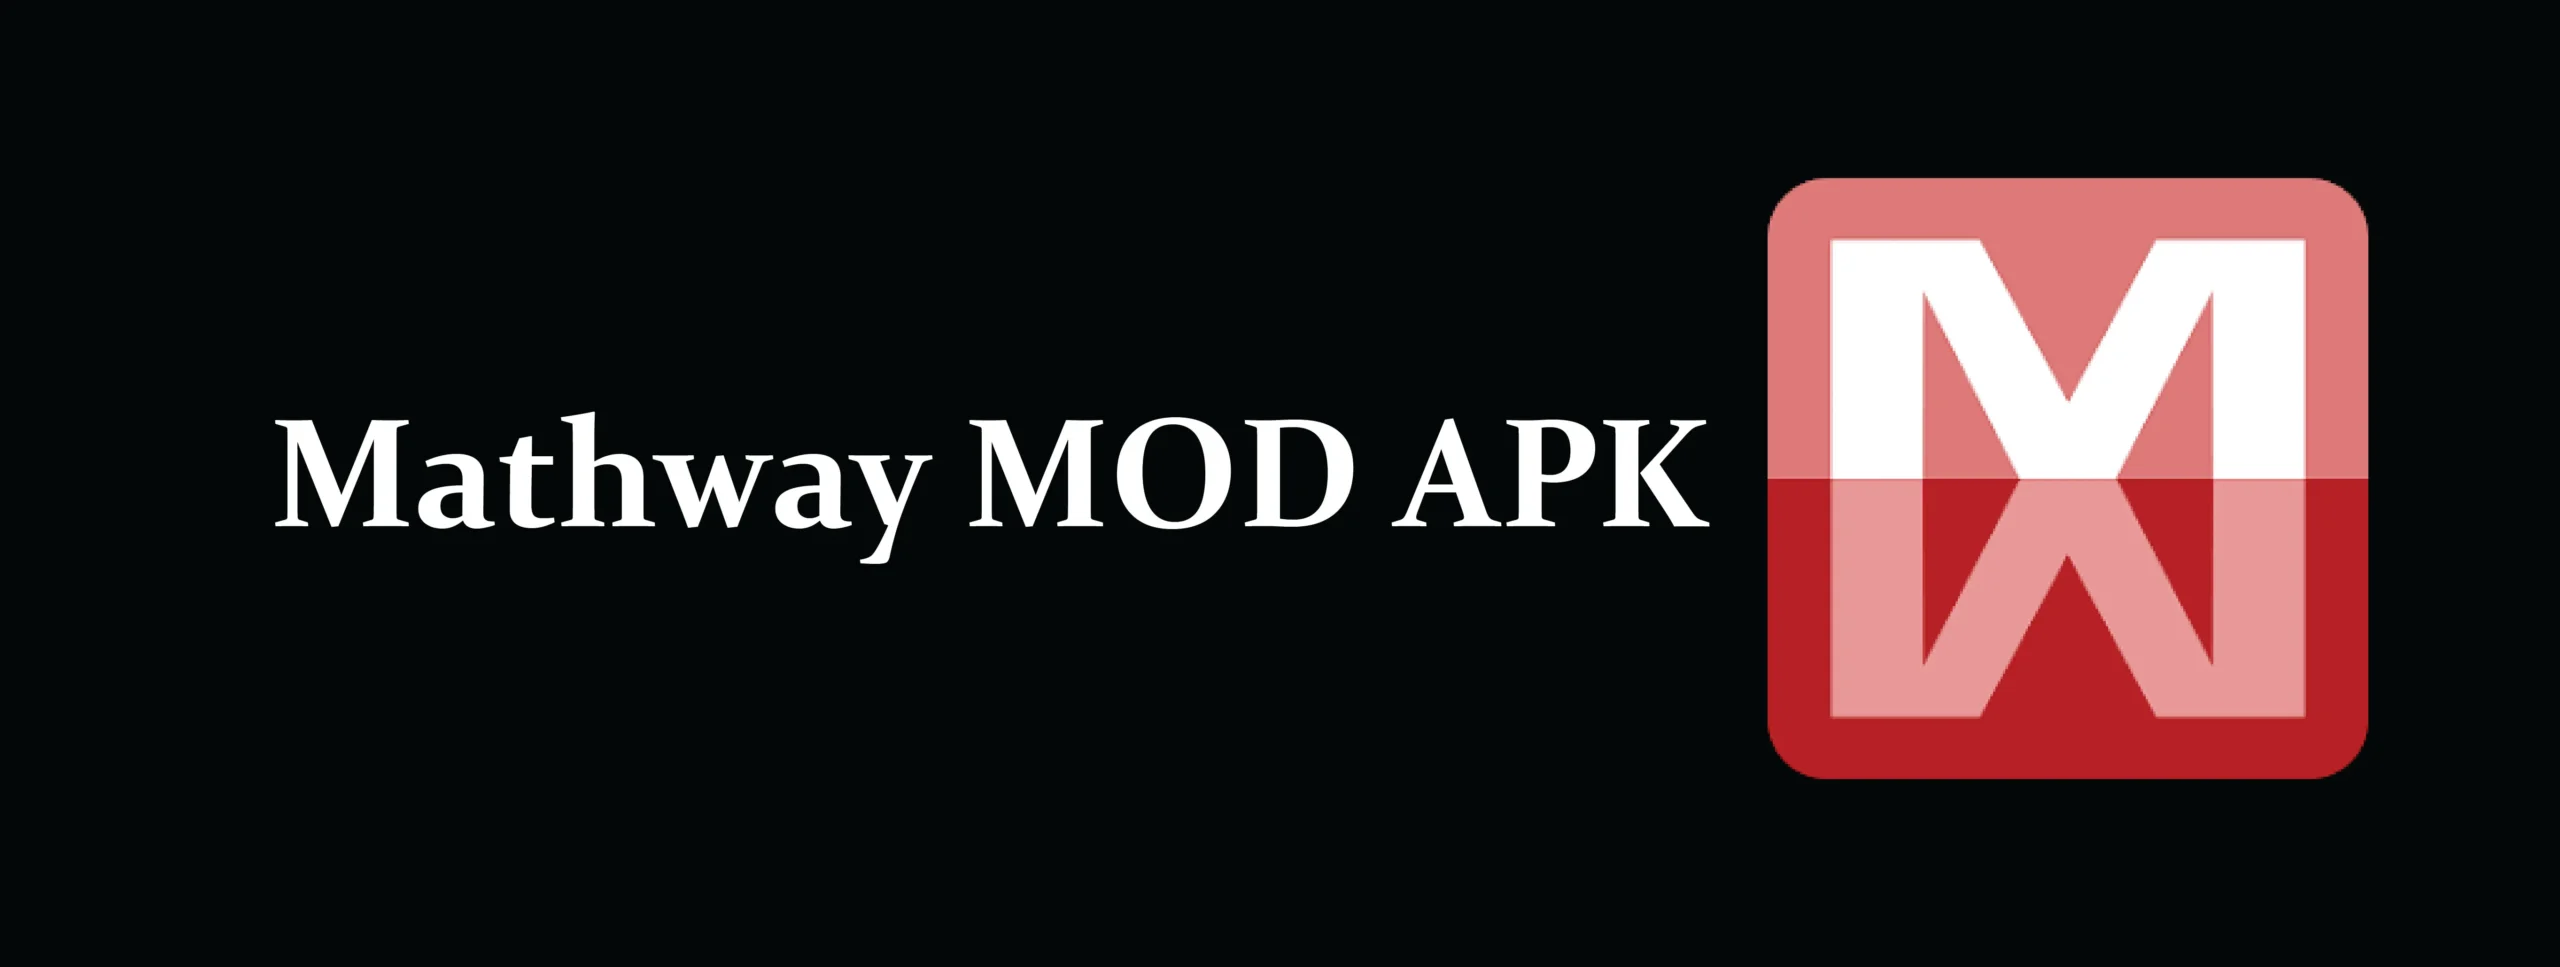 Mathway MOD APK V5.6.1